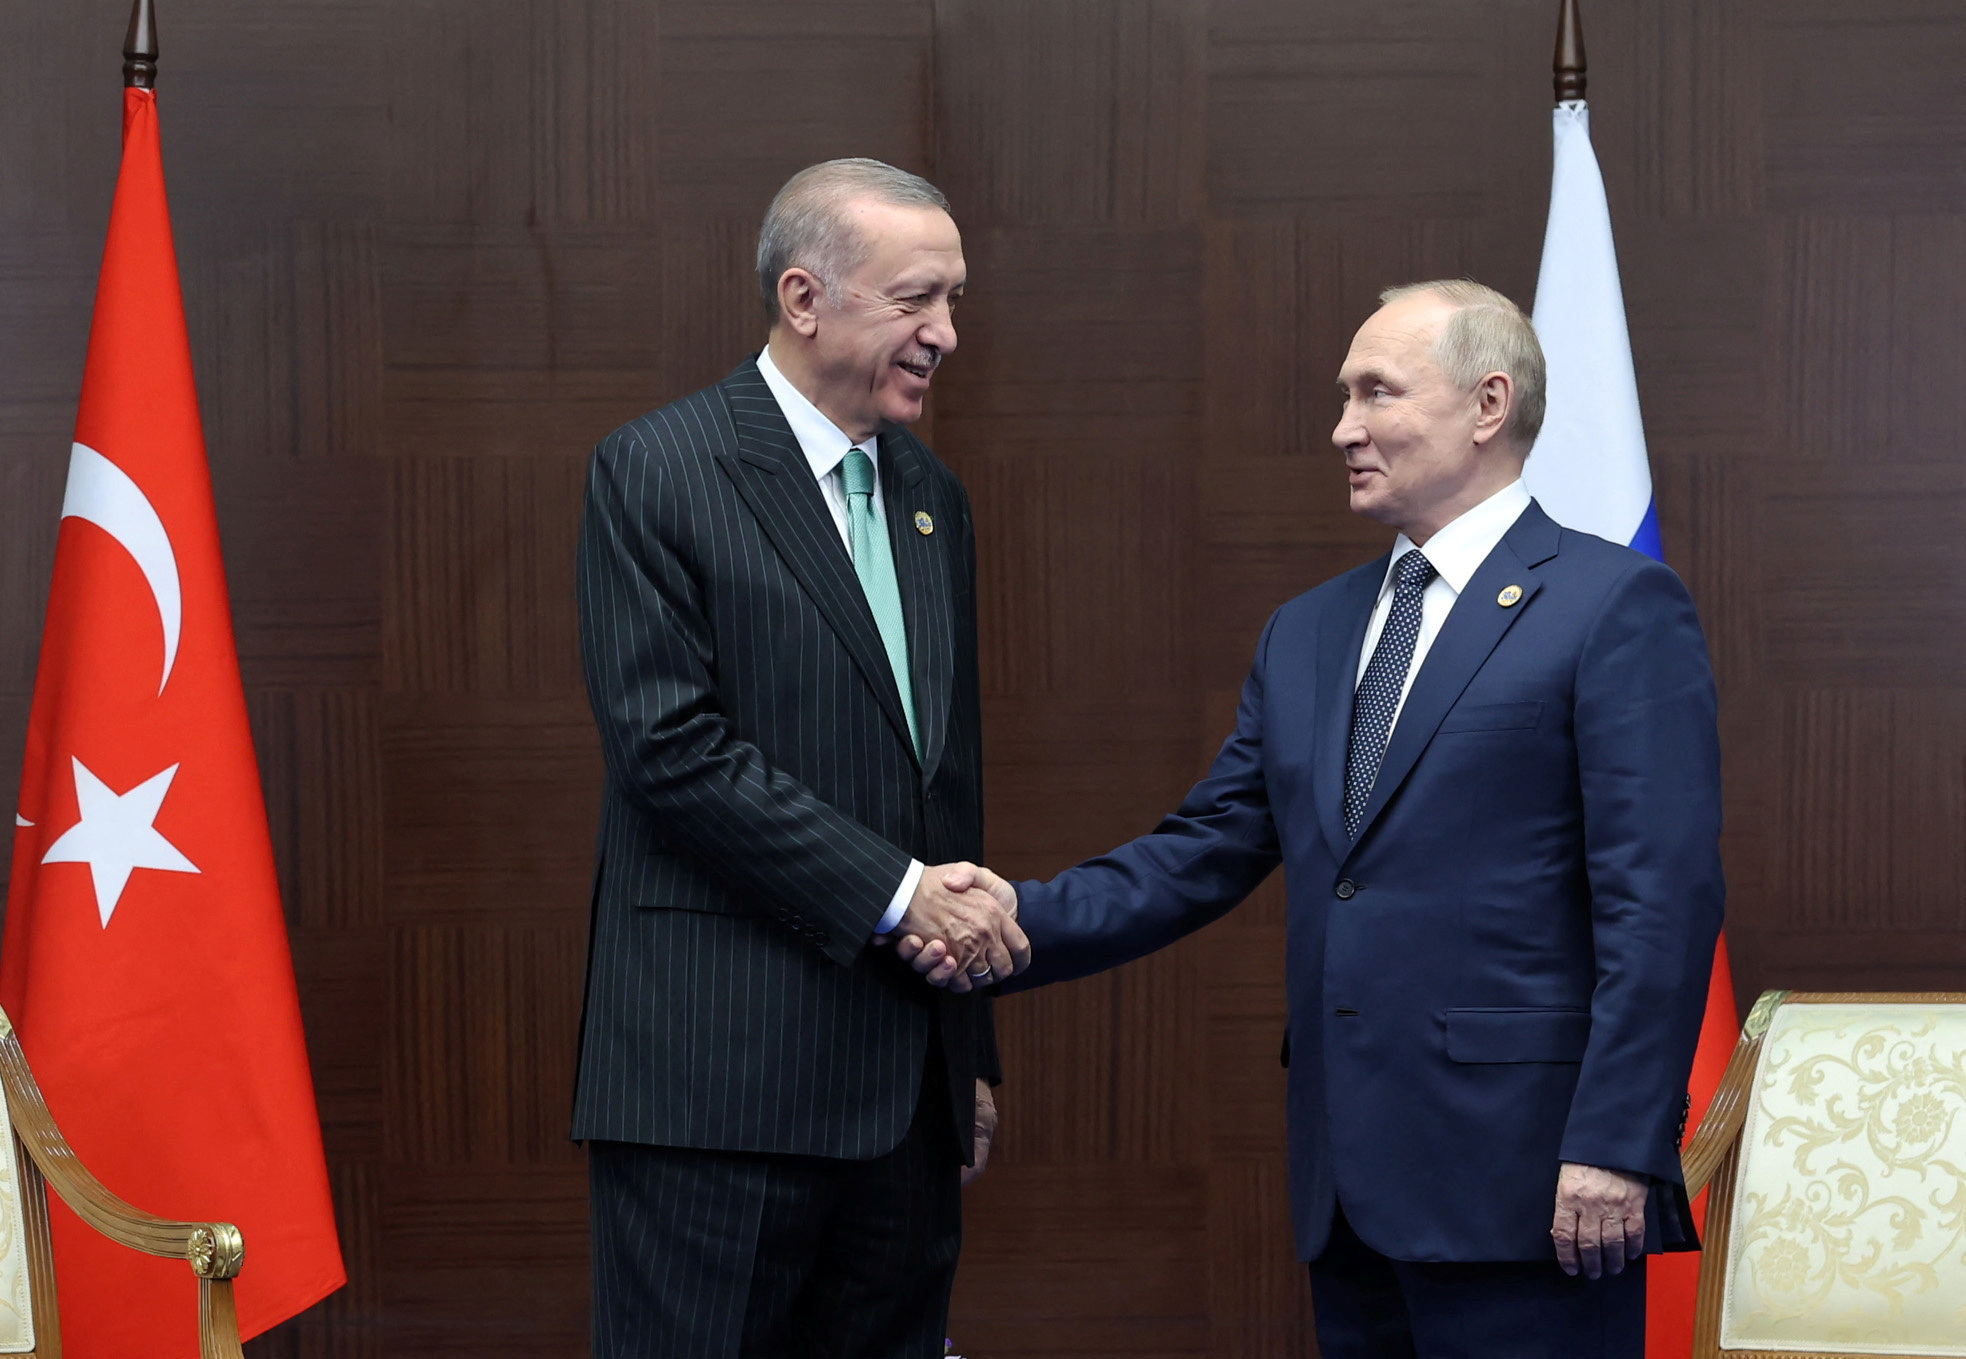 Putin touts Turkey gas hub while Europe looks to cut consumption | Reuters